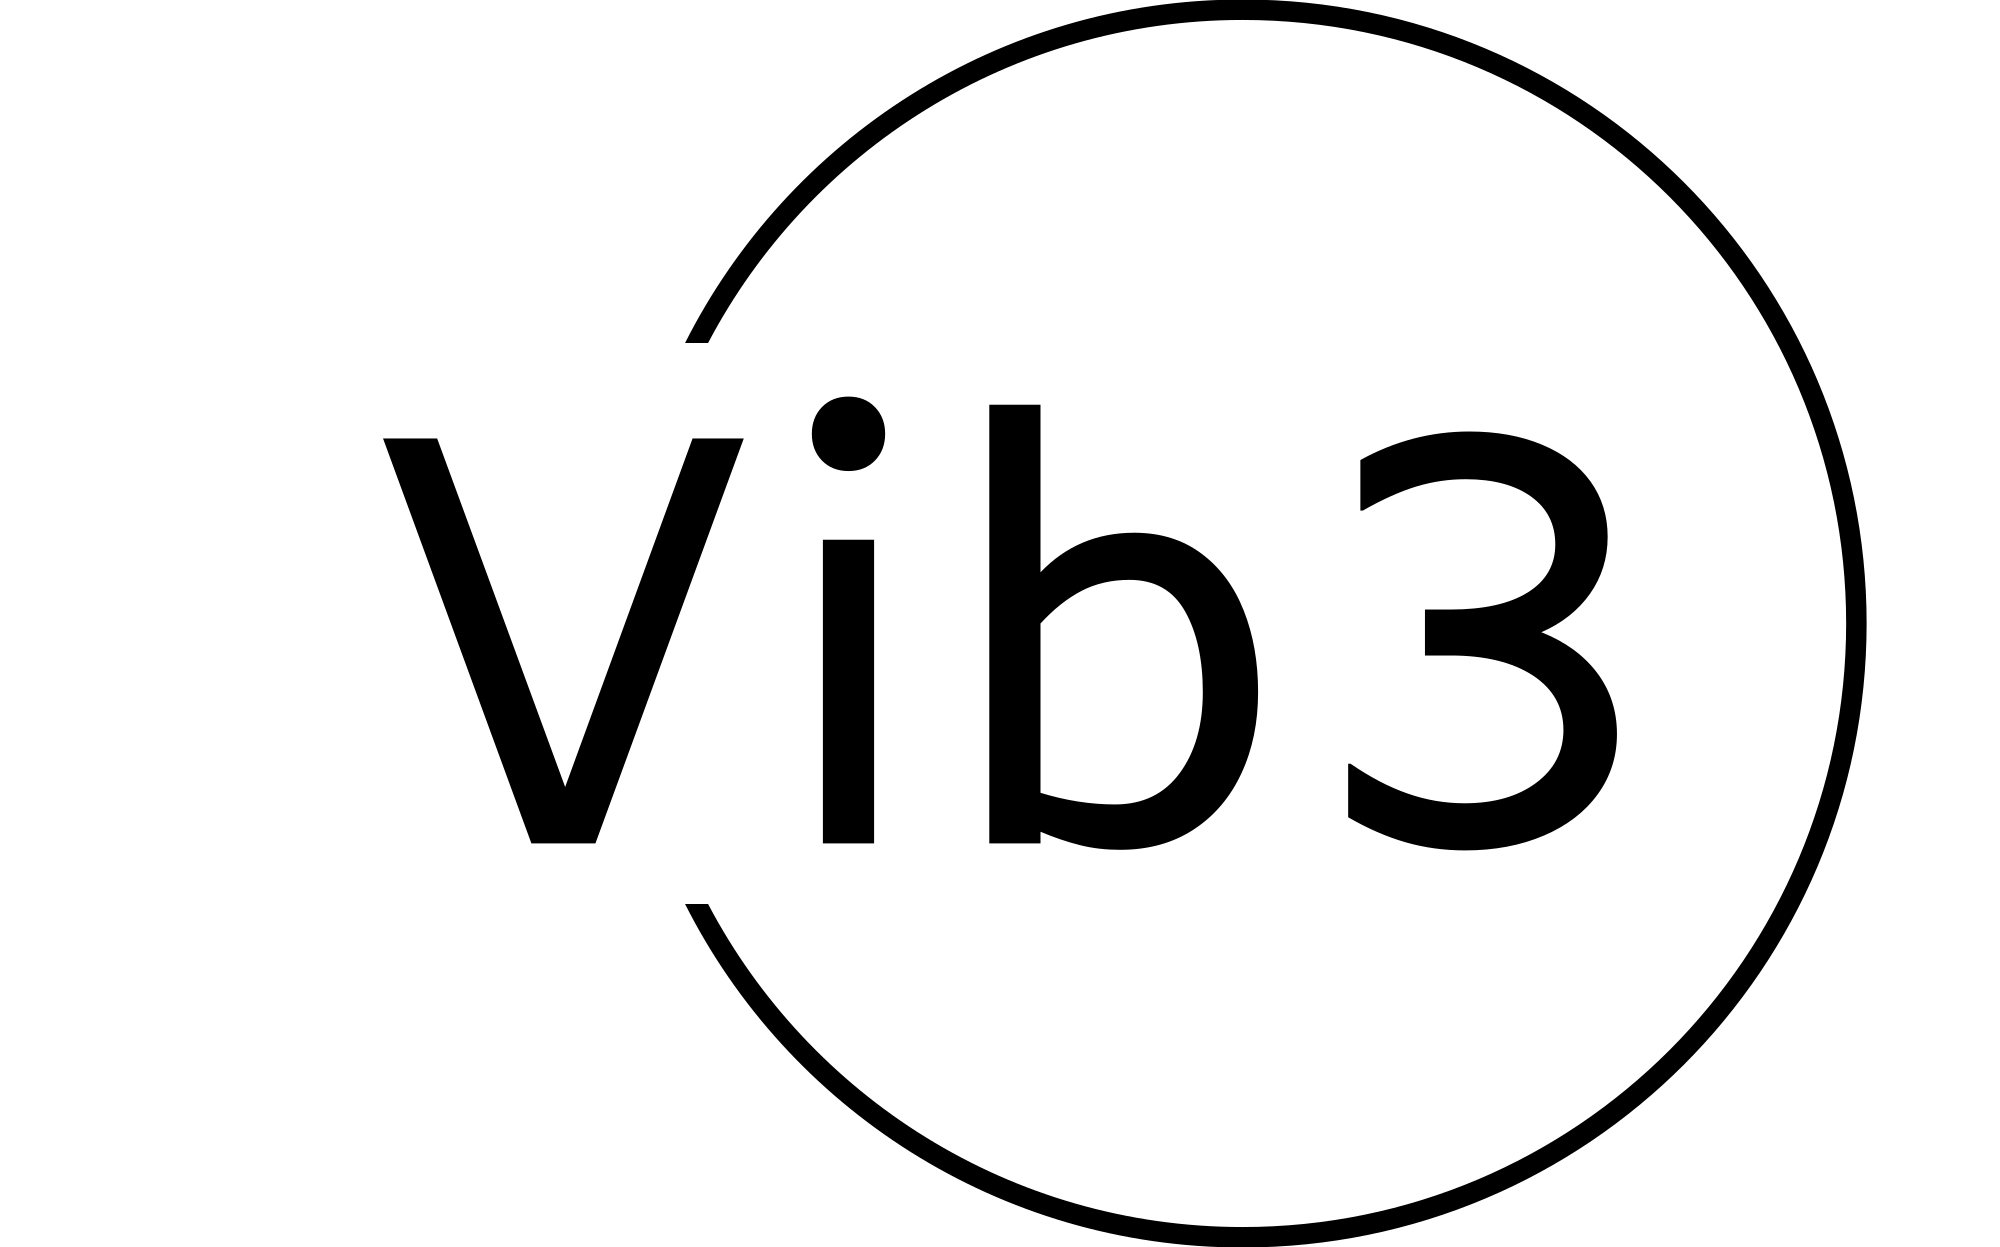 Vib3